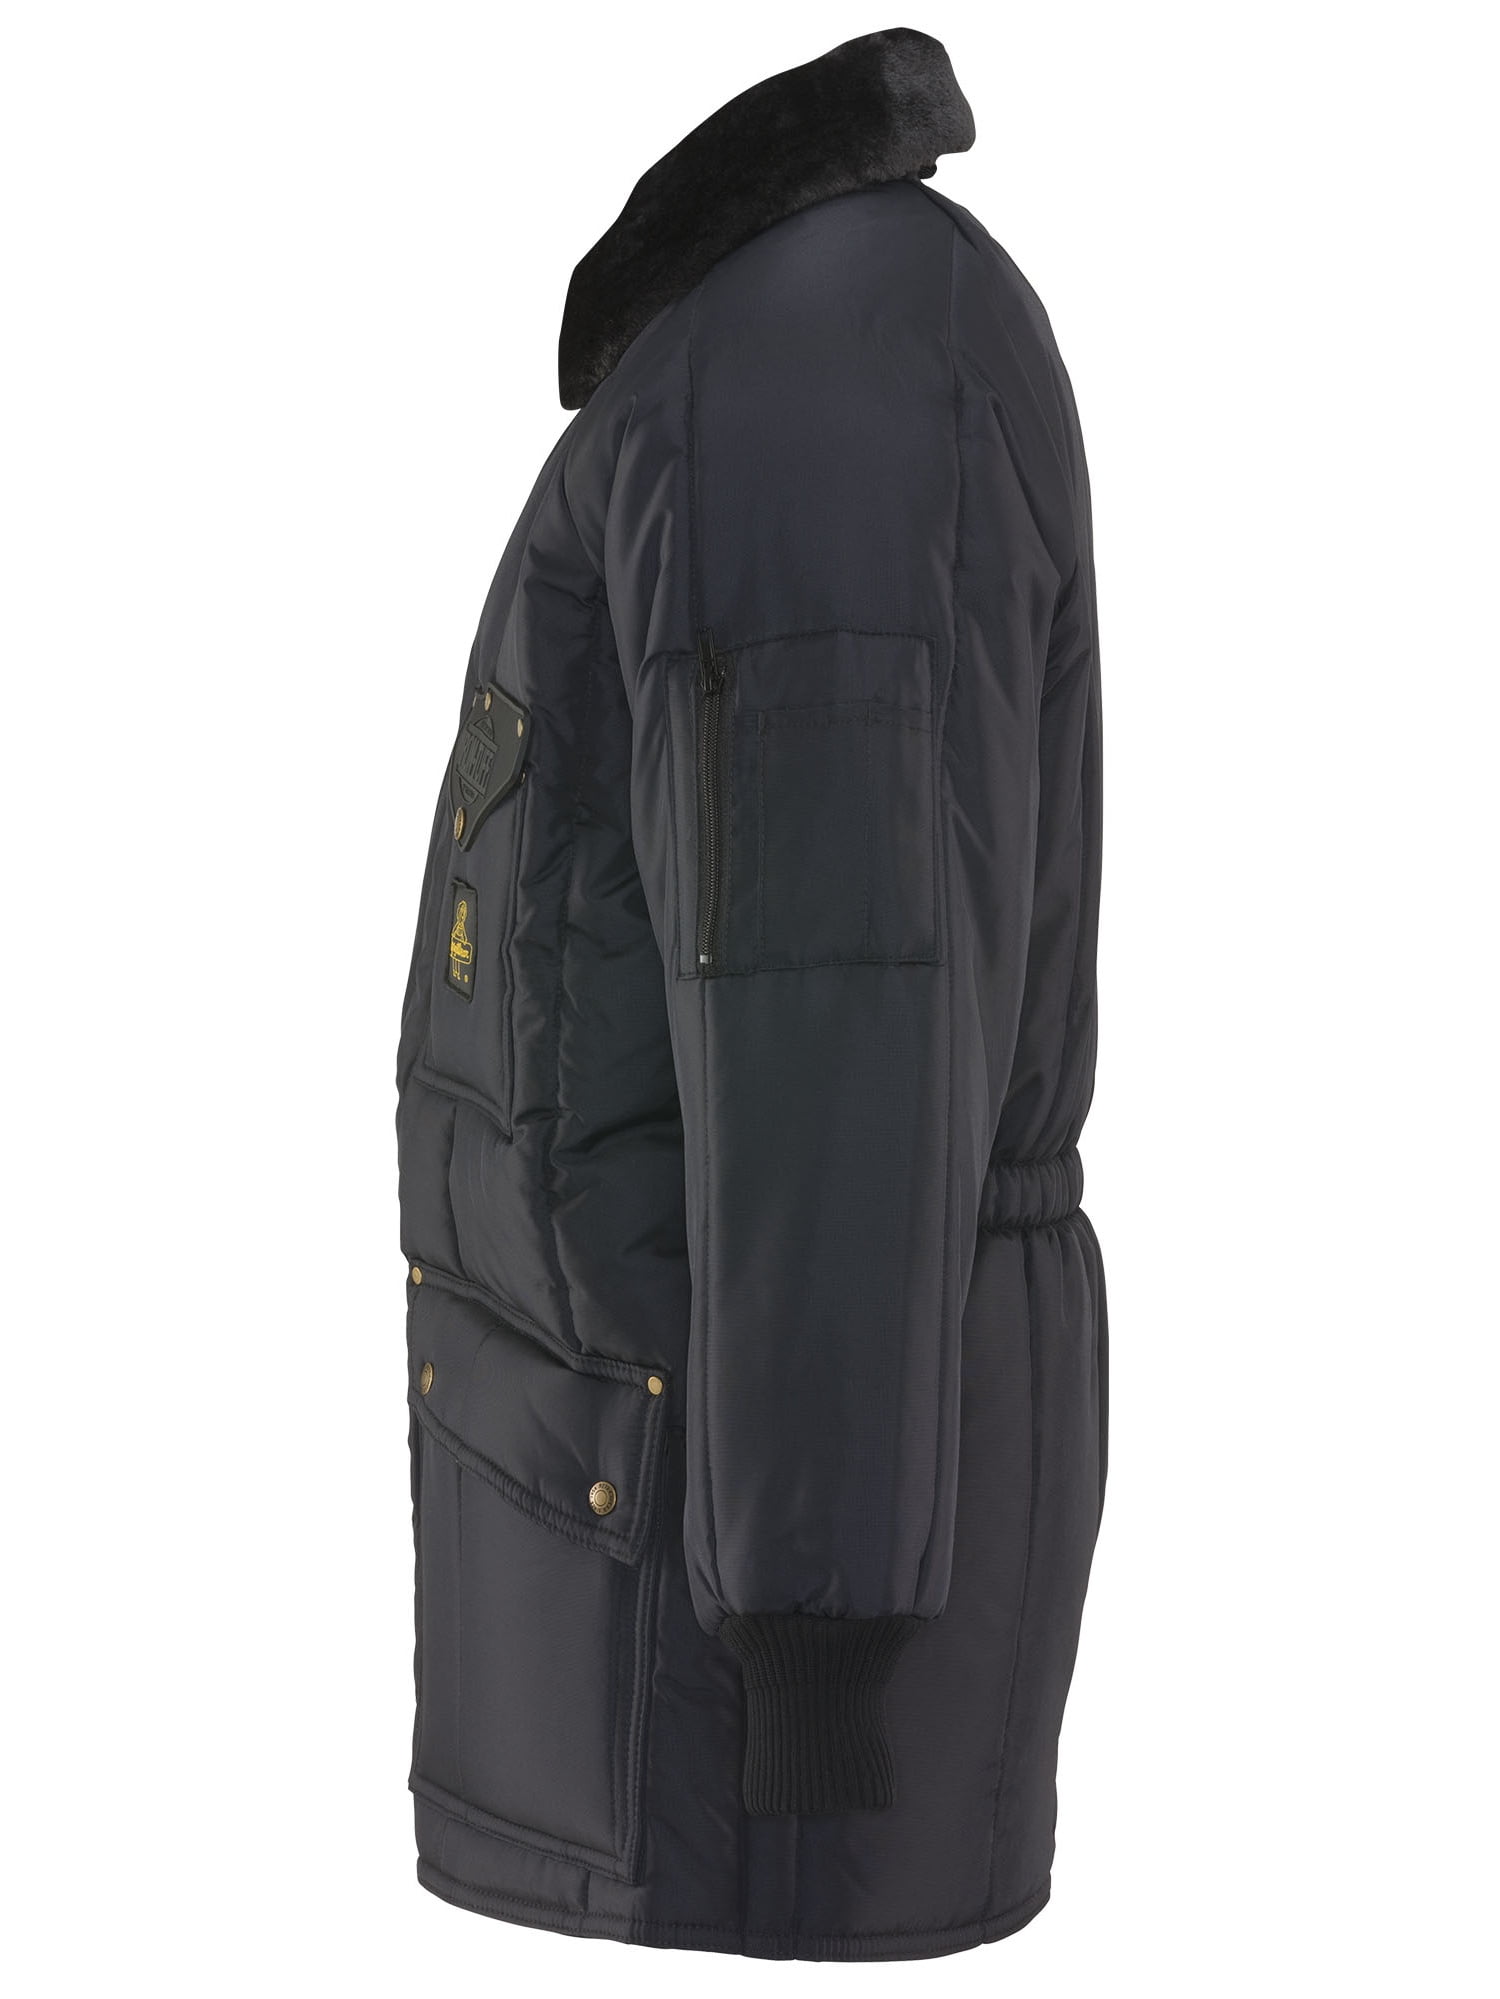 RefrigiWear Mens Water-Resistant Insulated Iron-Tuff Siberian Workwear Jacket with Soft Fleece Collar